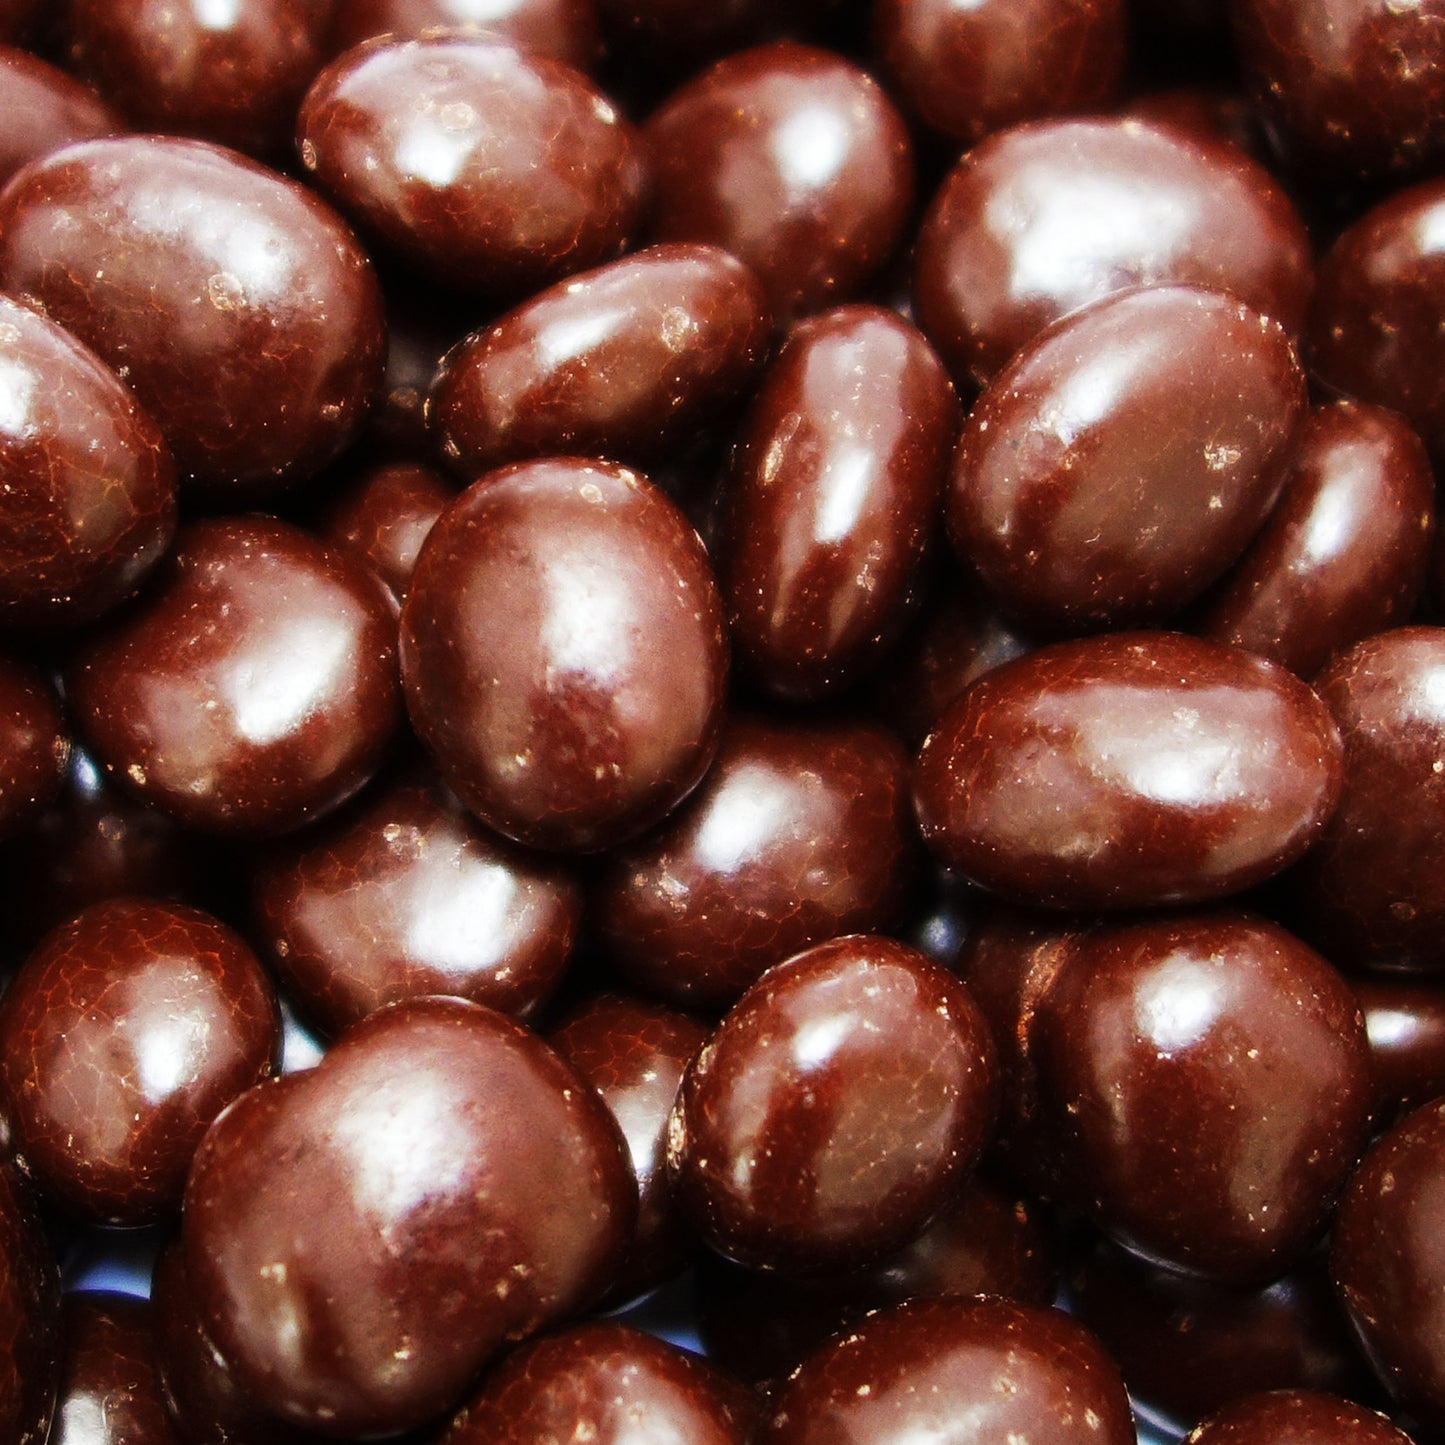 DC Americanos coffee beans in dark chocolate 3 x 369g